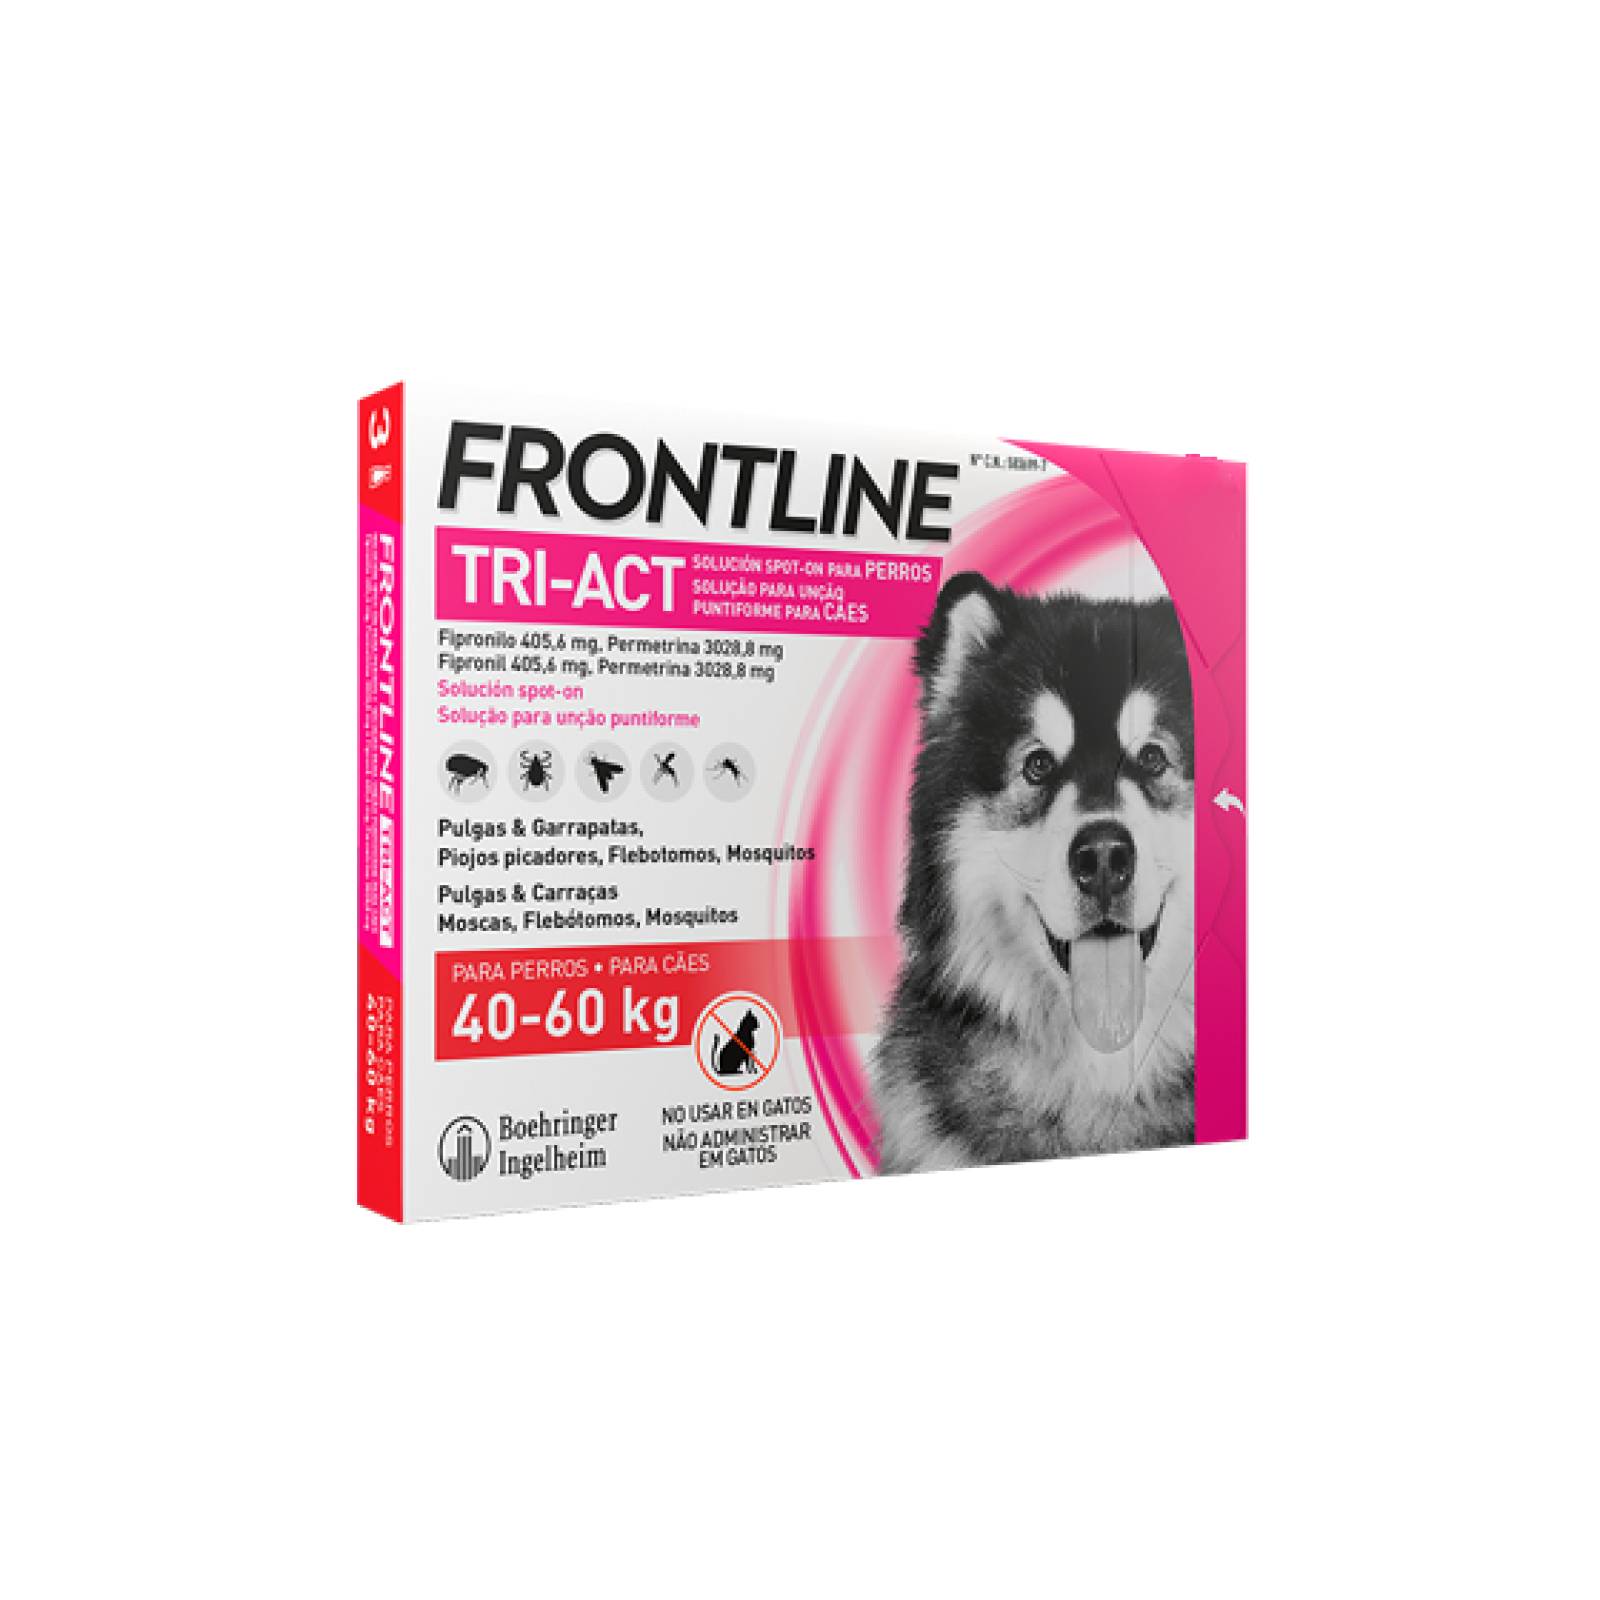 Frontline Tri-act Antiparasitario para Perro XL (40-60 KG) 1 pipeta